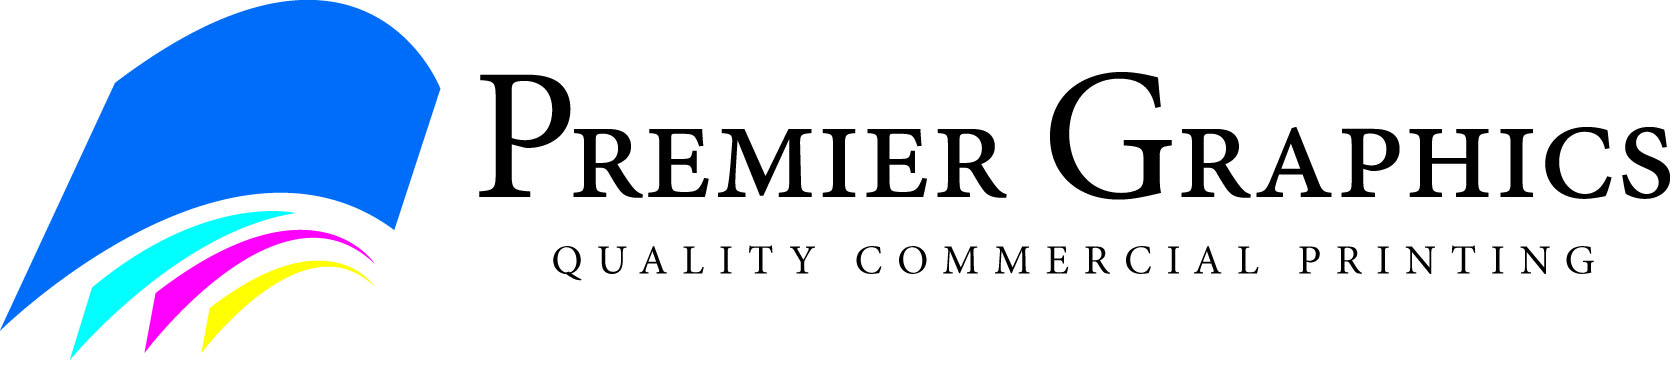 Premier Graphics's Logo